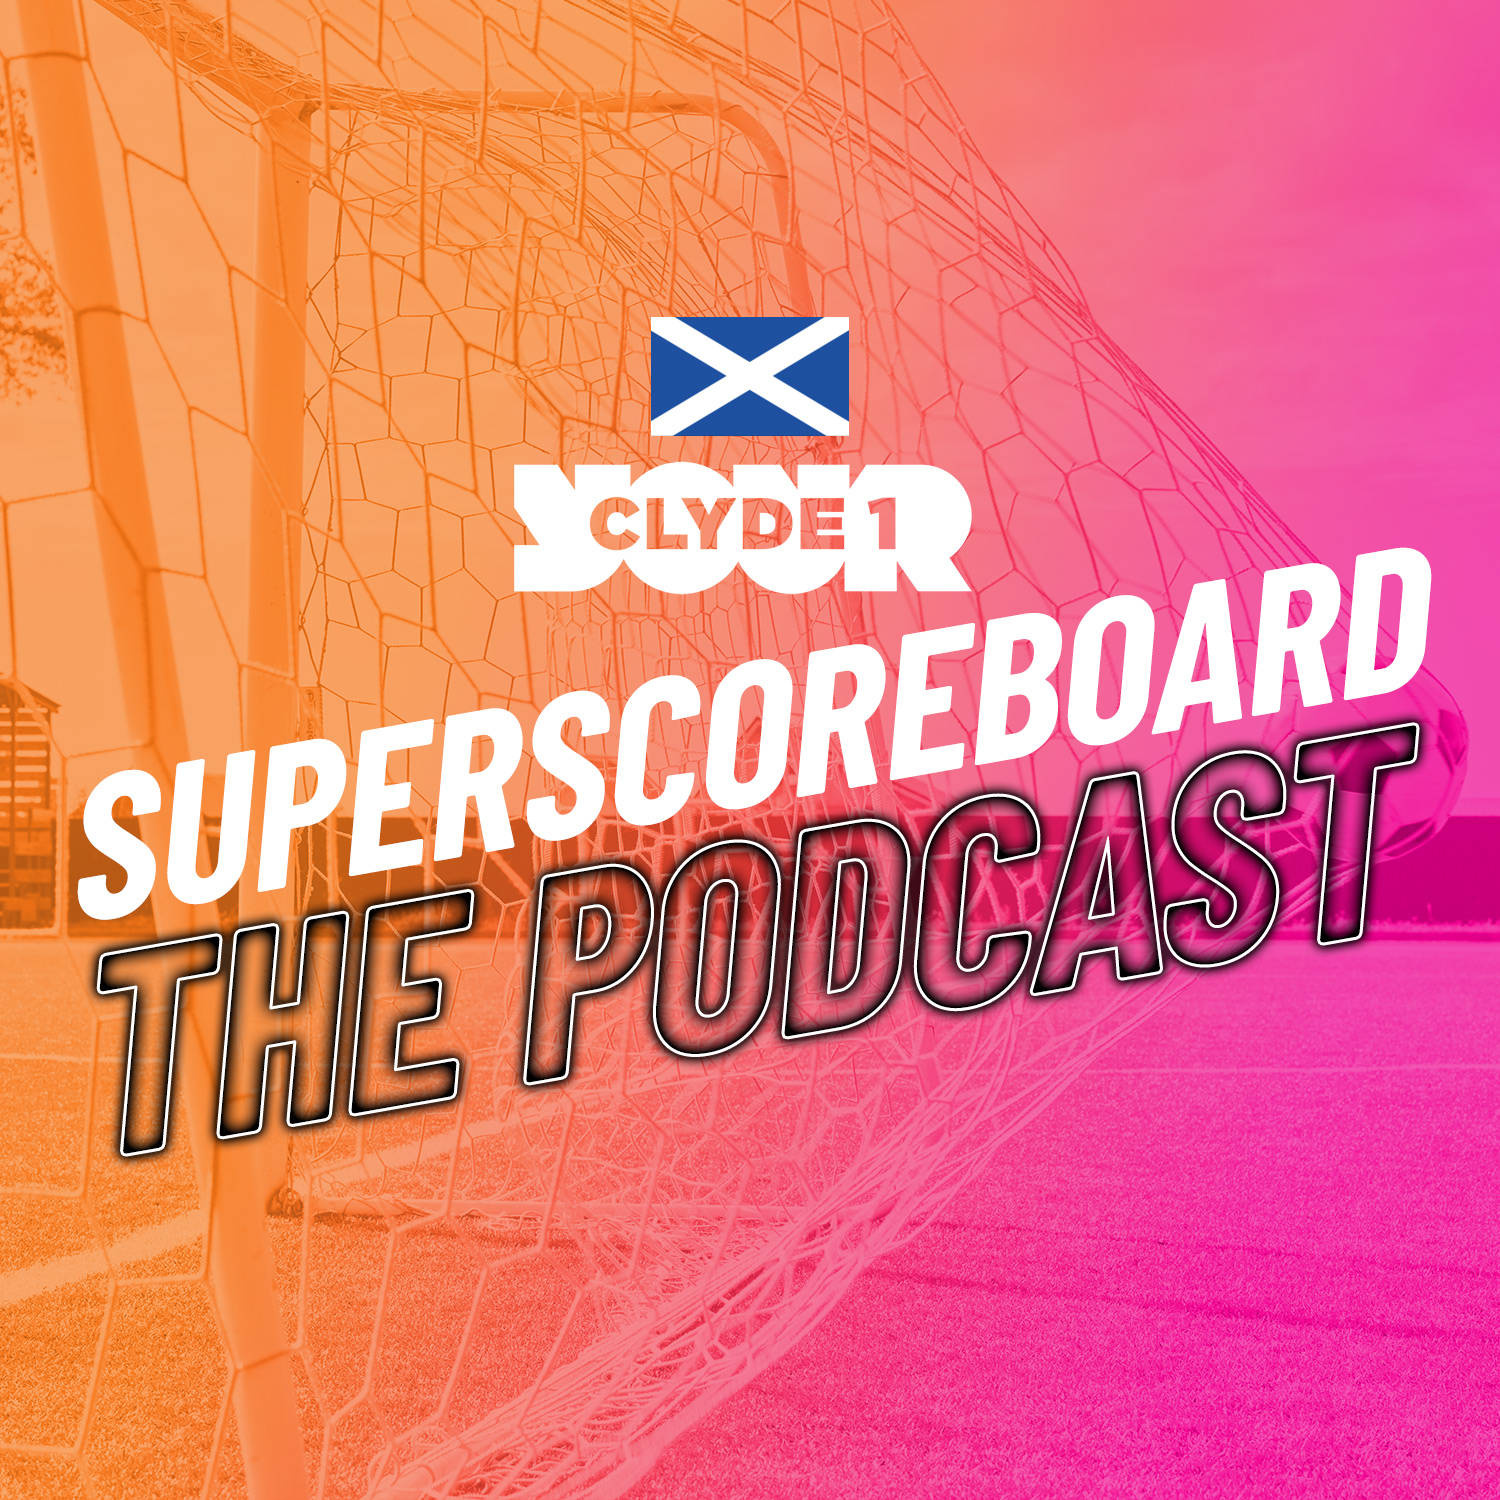 Wednesday 3rd April Clyde 1 Superscoreboard